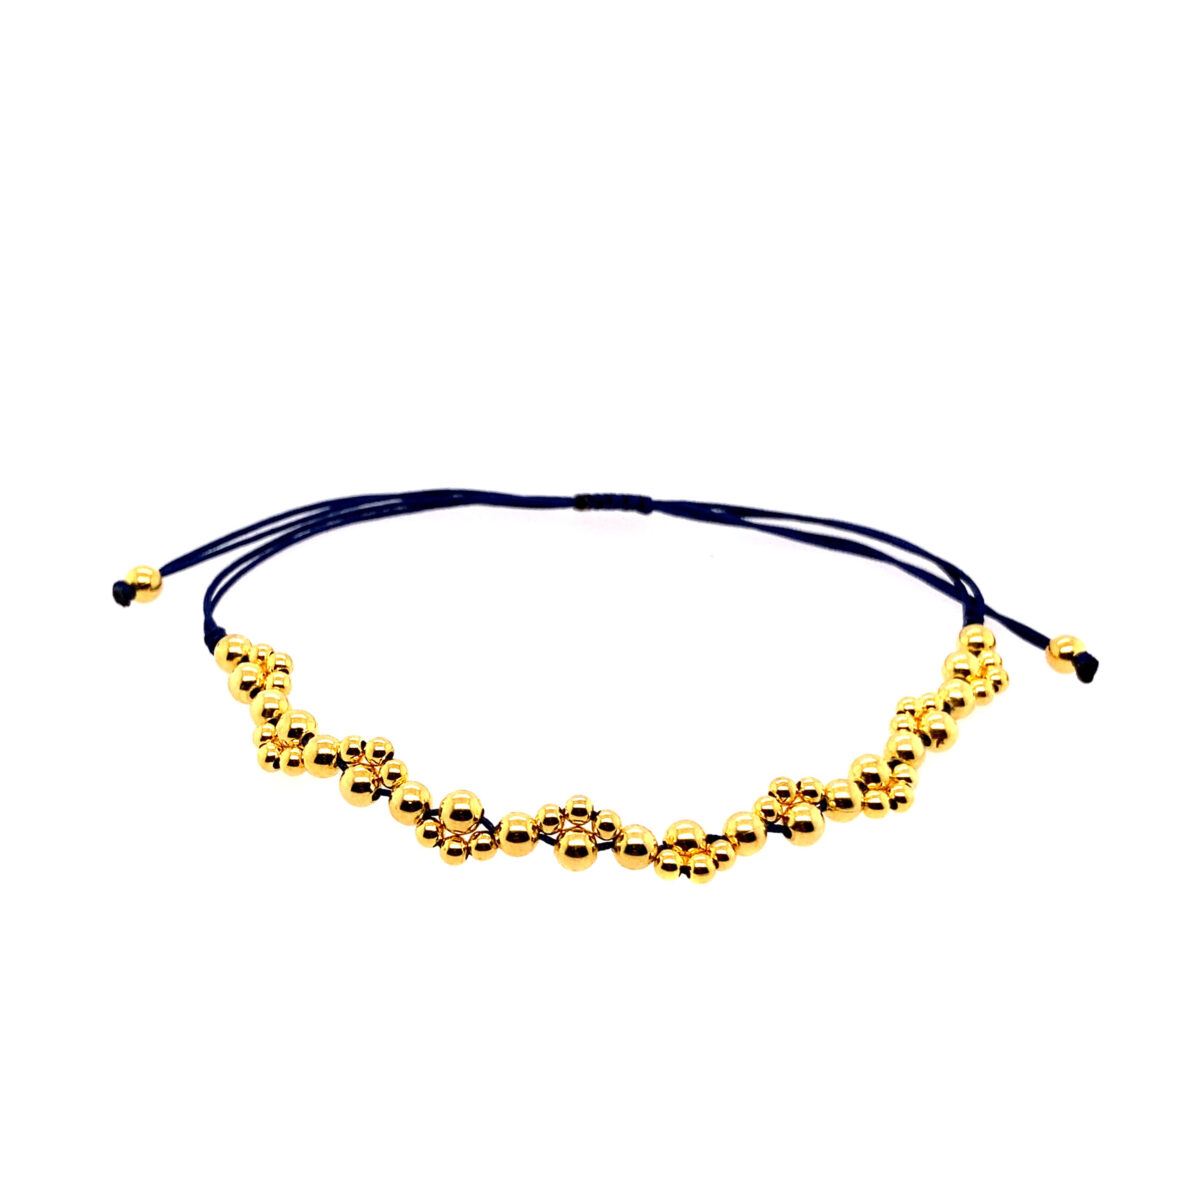 freudenschmuck duesseldorf knuepfarmband mit silberkugeln vergoldet versetzt lila 150 16 0092s3990.jpg.jpg 1 scaled